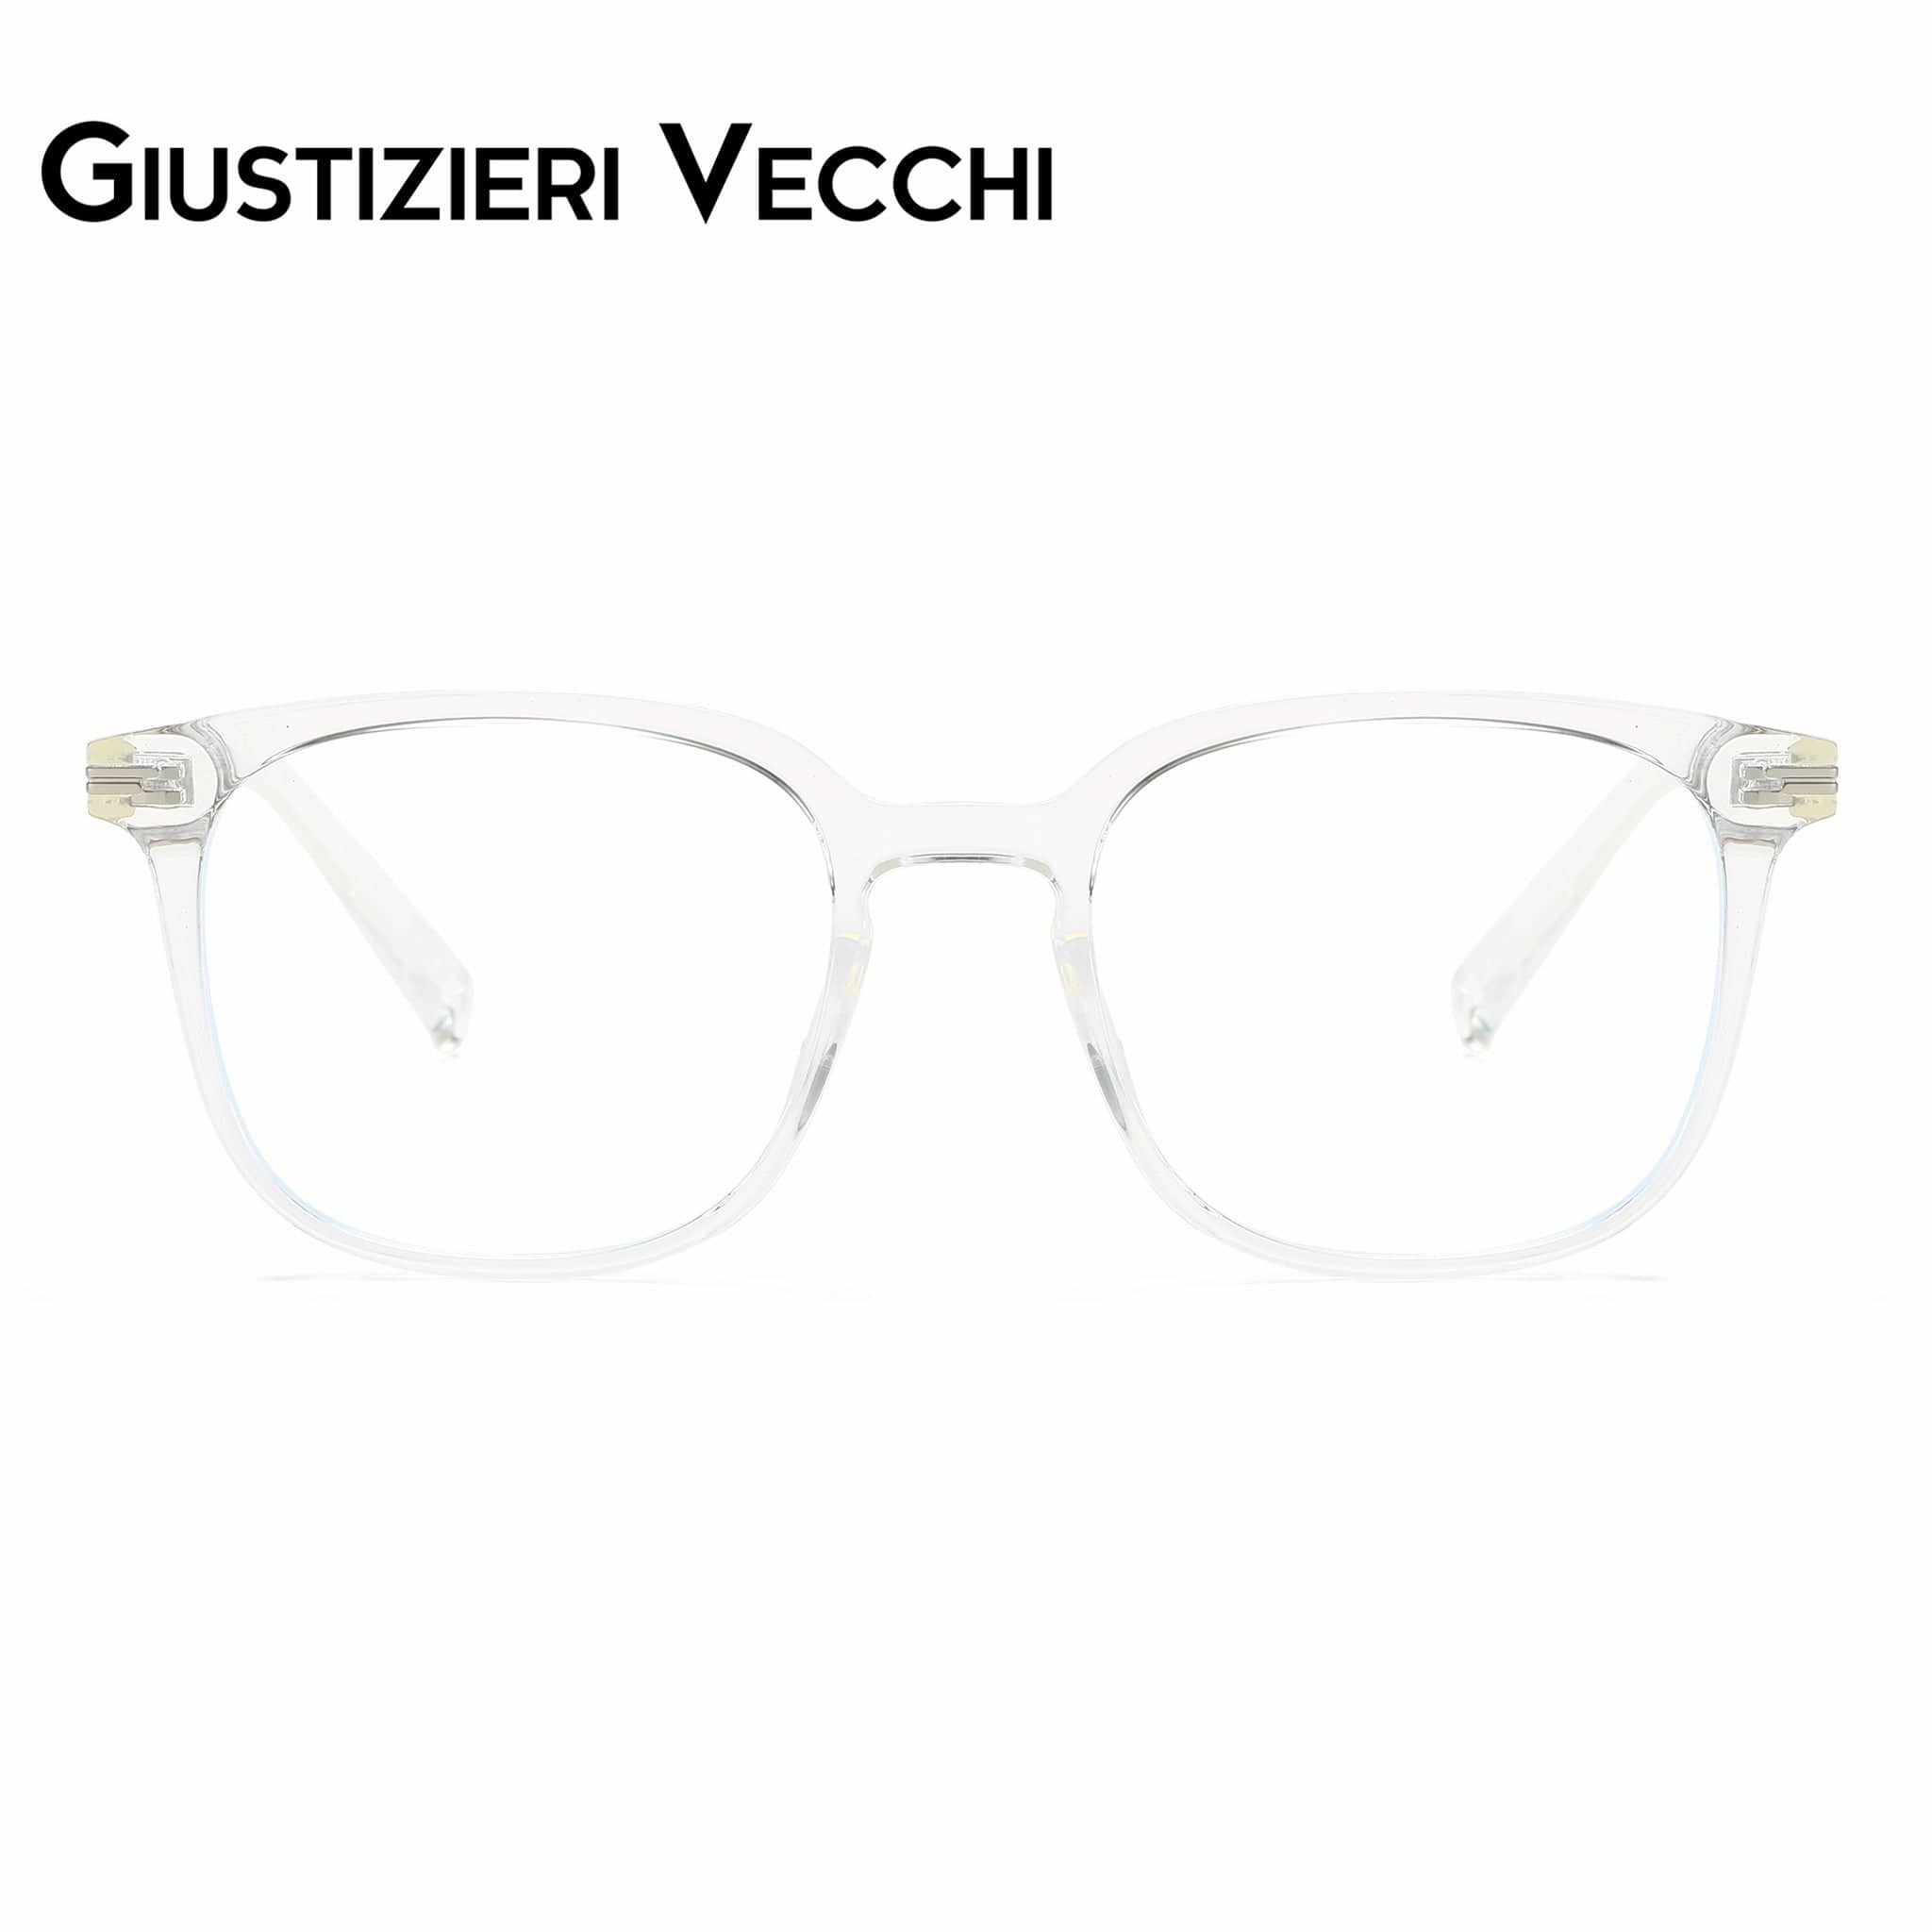 GIUSTIZIERI VECCHI Eyeglasses Medium / Clear Crystal SkyBloom Duo